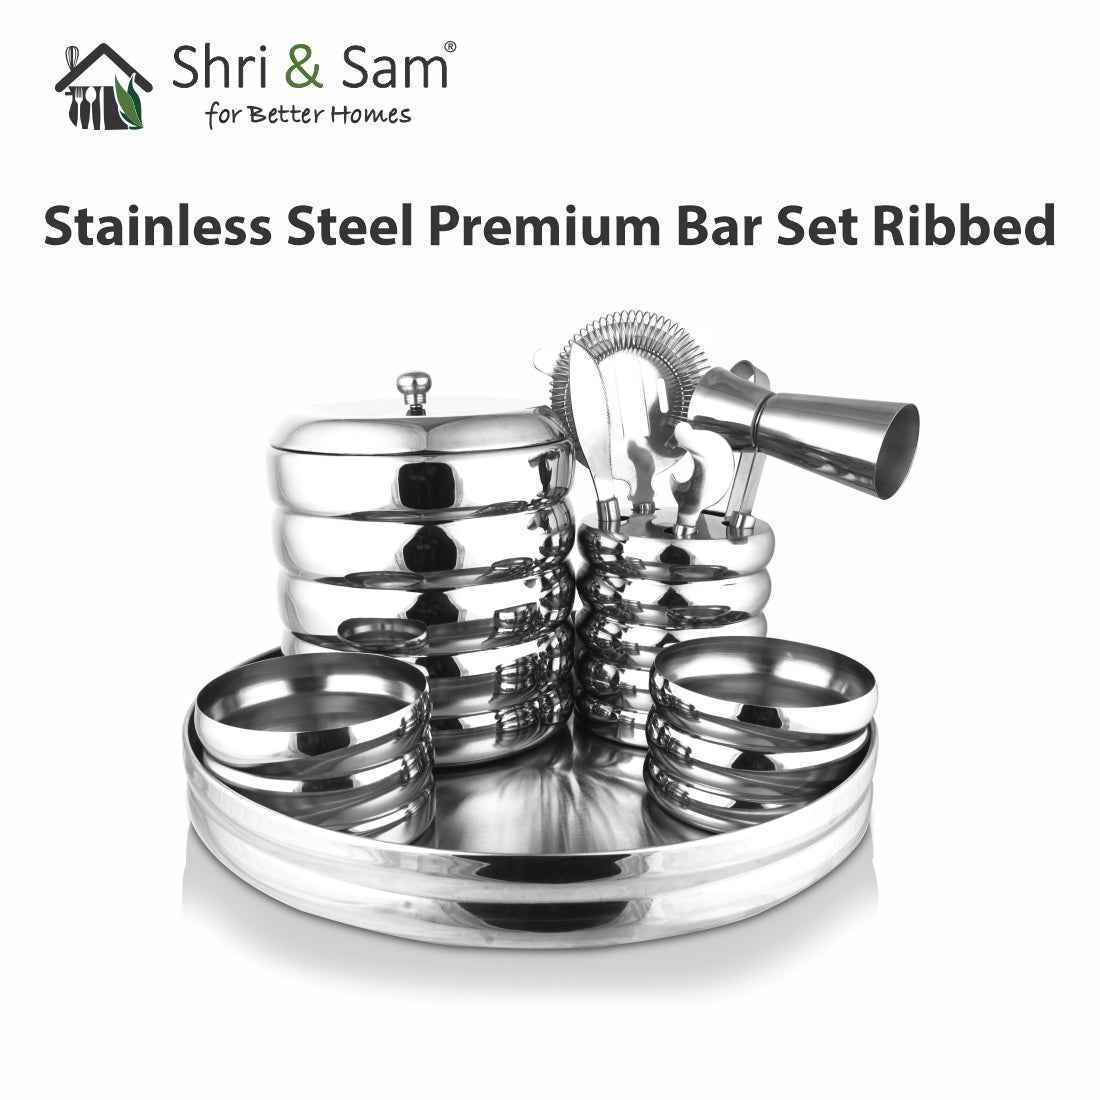 Stainless Steel Premium Bar Set Ribbed